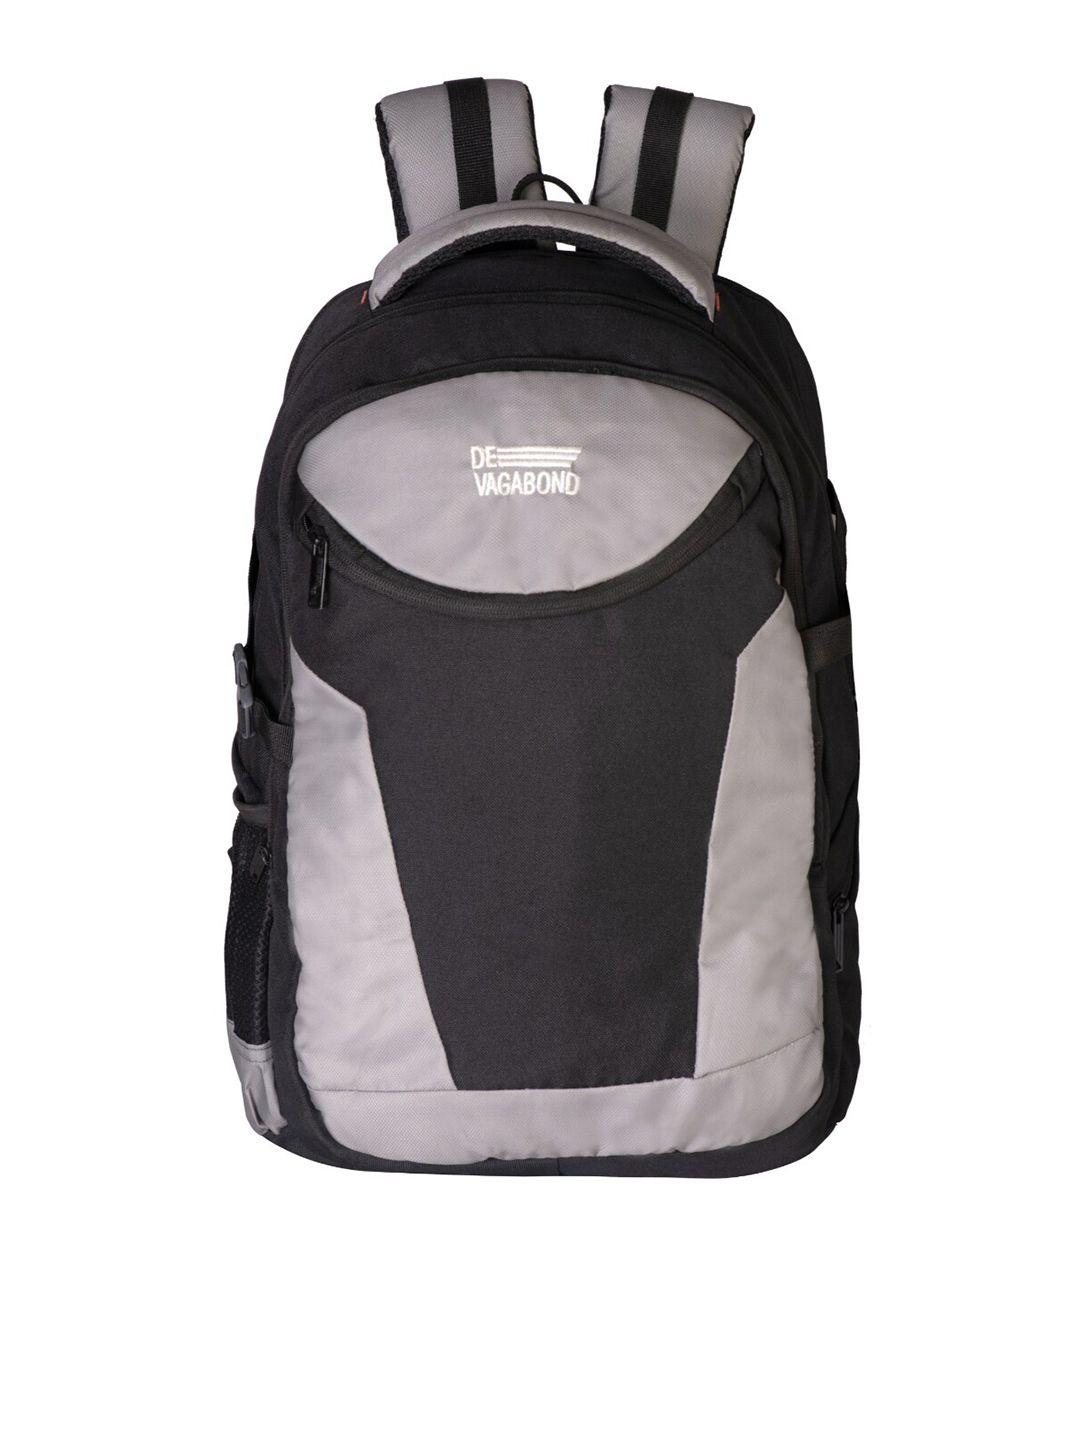 devagabond black & grey colourblocked backpack